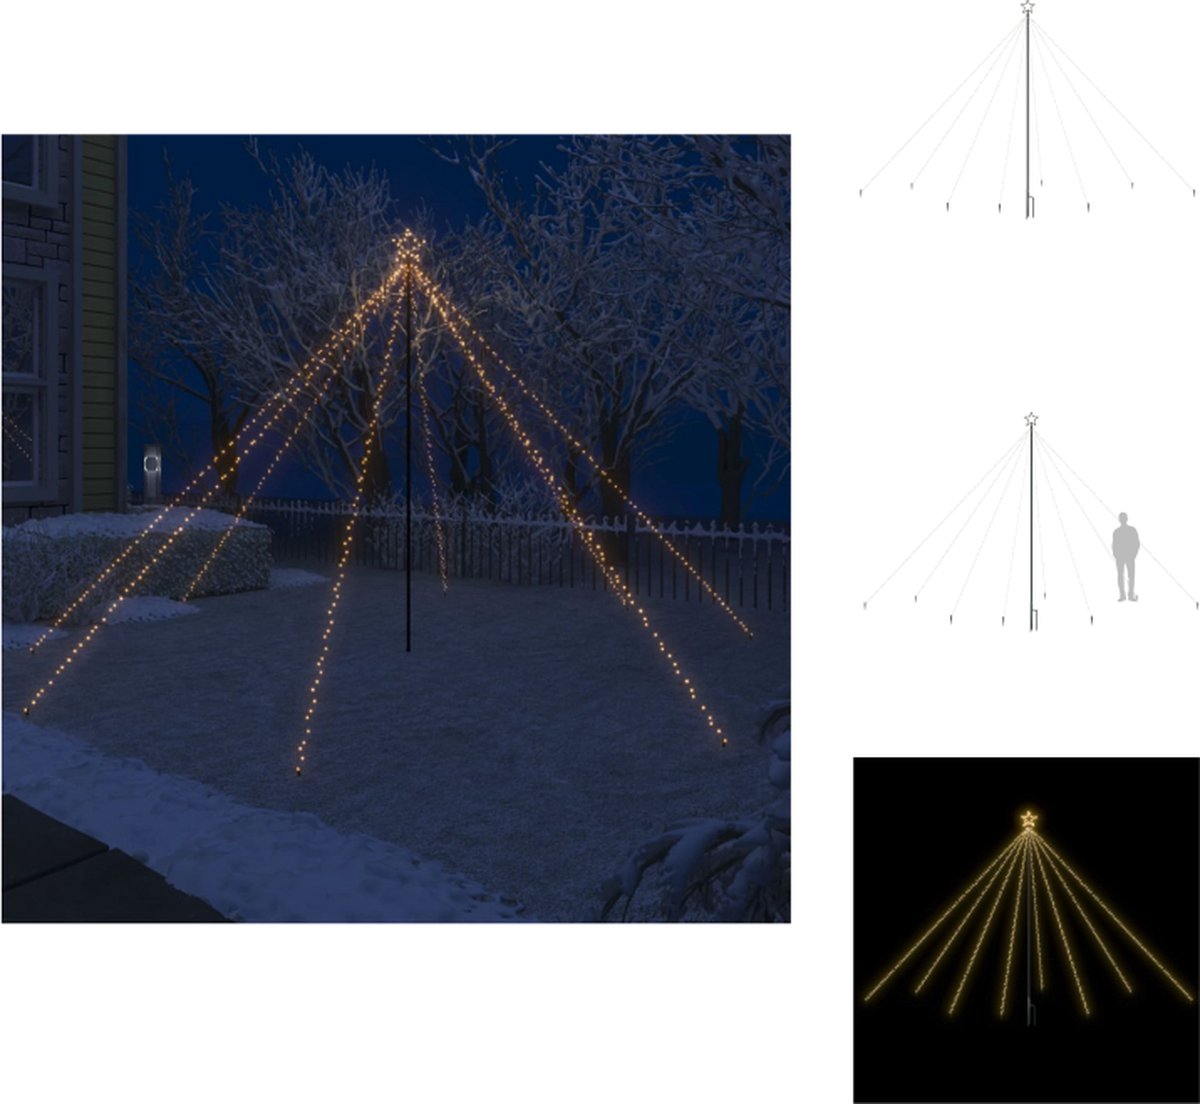 vidaXL Kerstboomverlichting - Watervalontwerp - 576 LEDs - 8 snoeren - Warmwit - 3.7m snoerlengte - 3.6m hoogte - IP44 - Stroomsnoer 10m - Inclusief ster - Decoratieve kerstboom